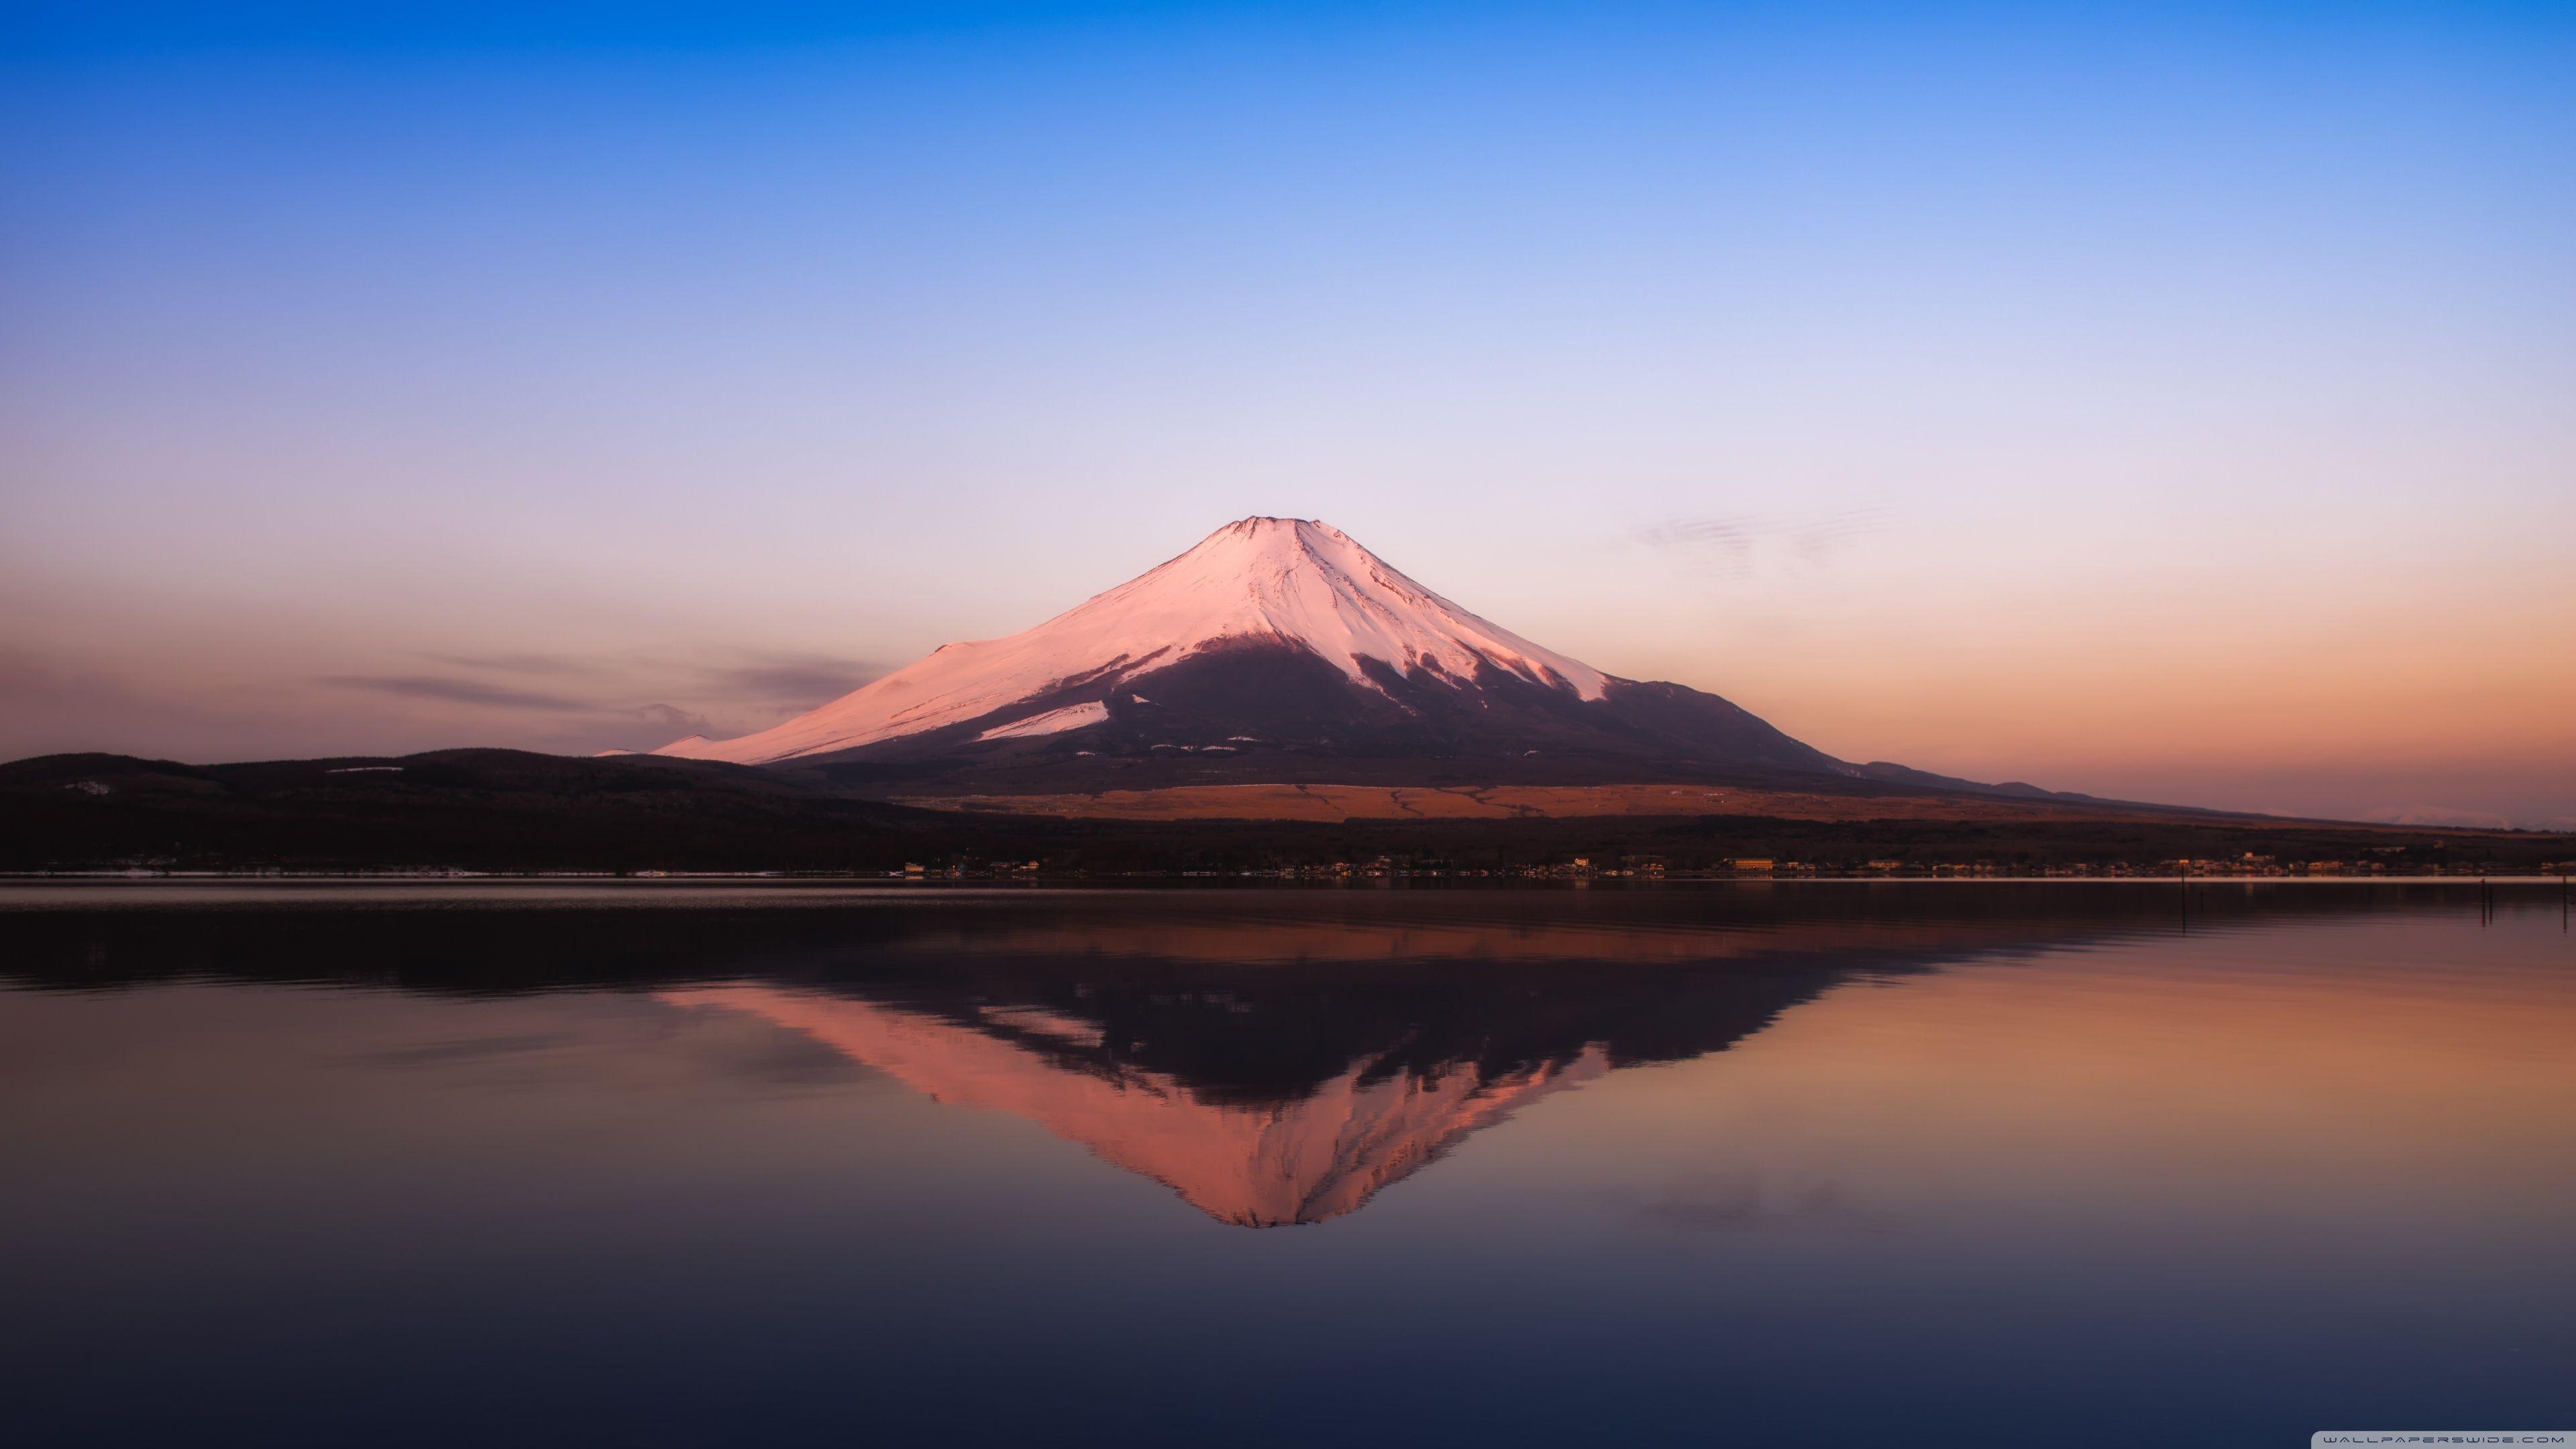 Japan Lake Landscape And Mount Fuji Mountain 4K 5K HD Nature Wallpapers |  HD Wallpapers | ID #50960